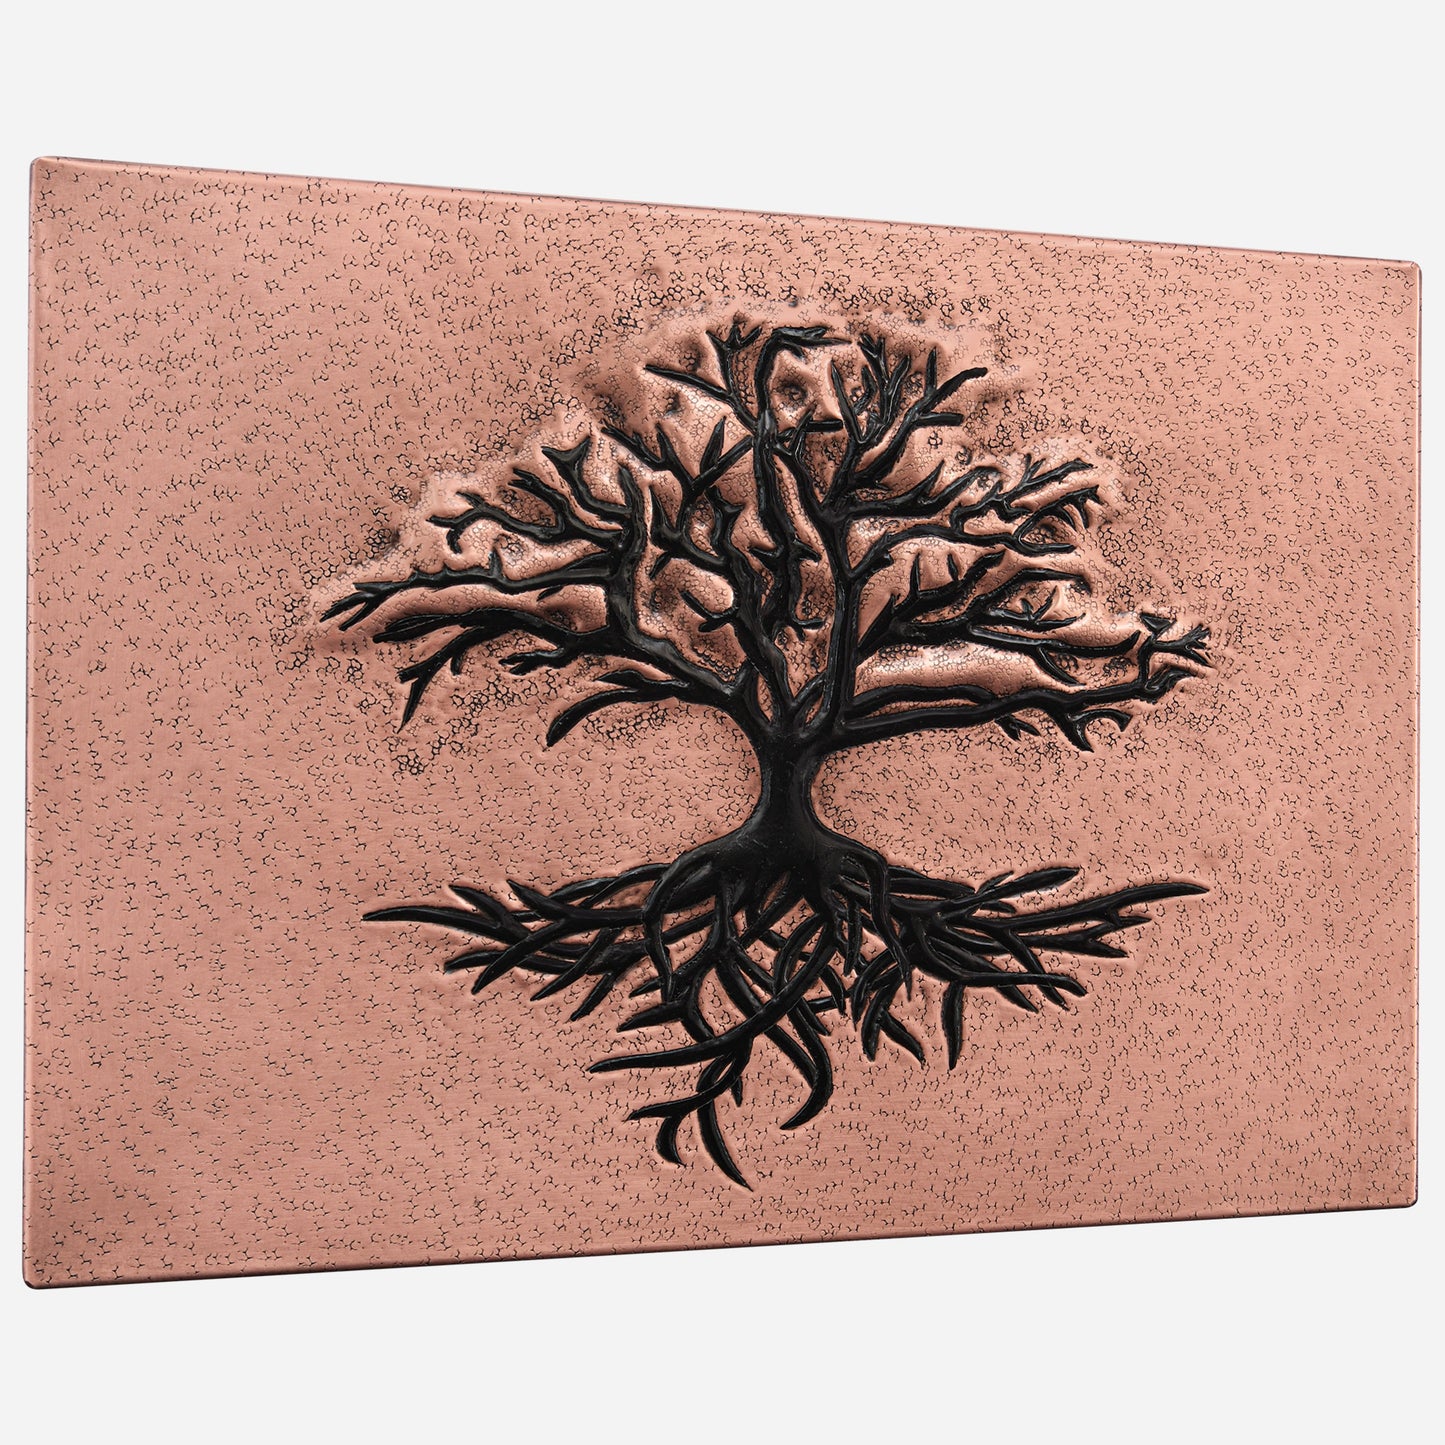 Tree with Roots Copper Kitchen Backsplash Tile